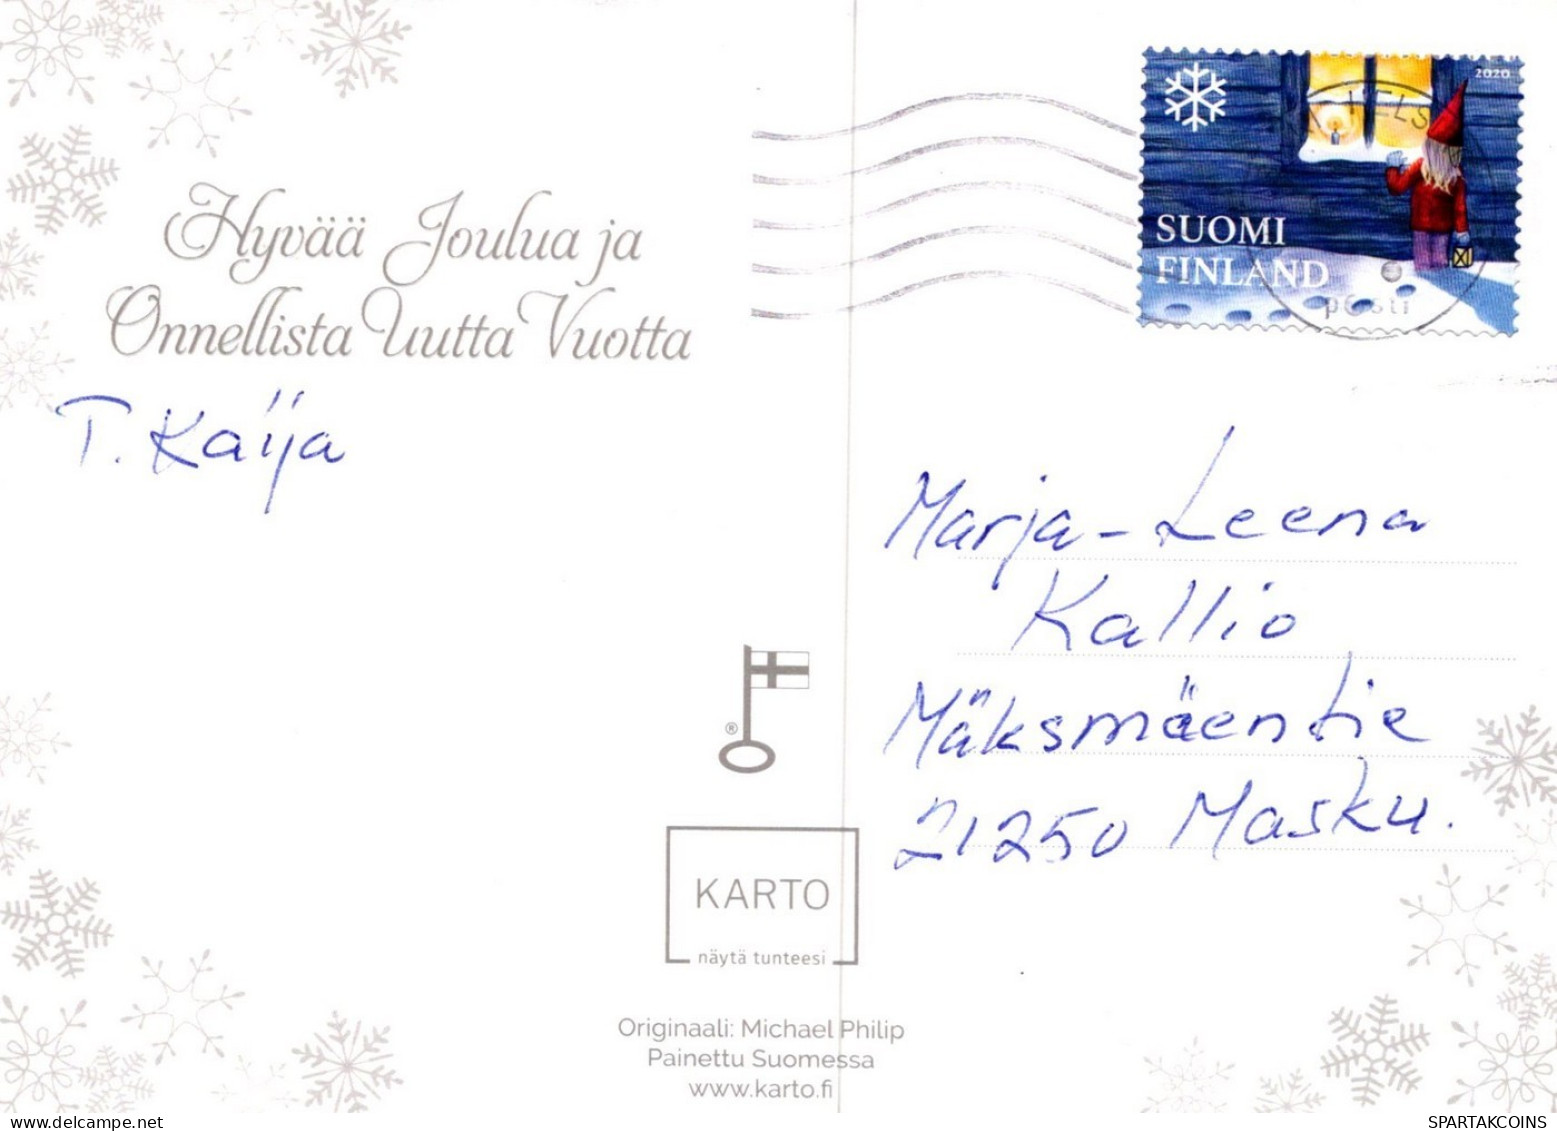 BABBO NATALE FLOWERS Natale Vintage Cartolina CPSM #PAK997.IT - Kerstman